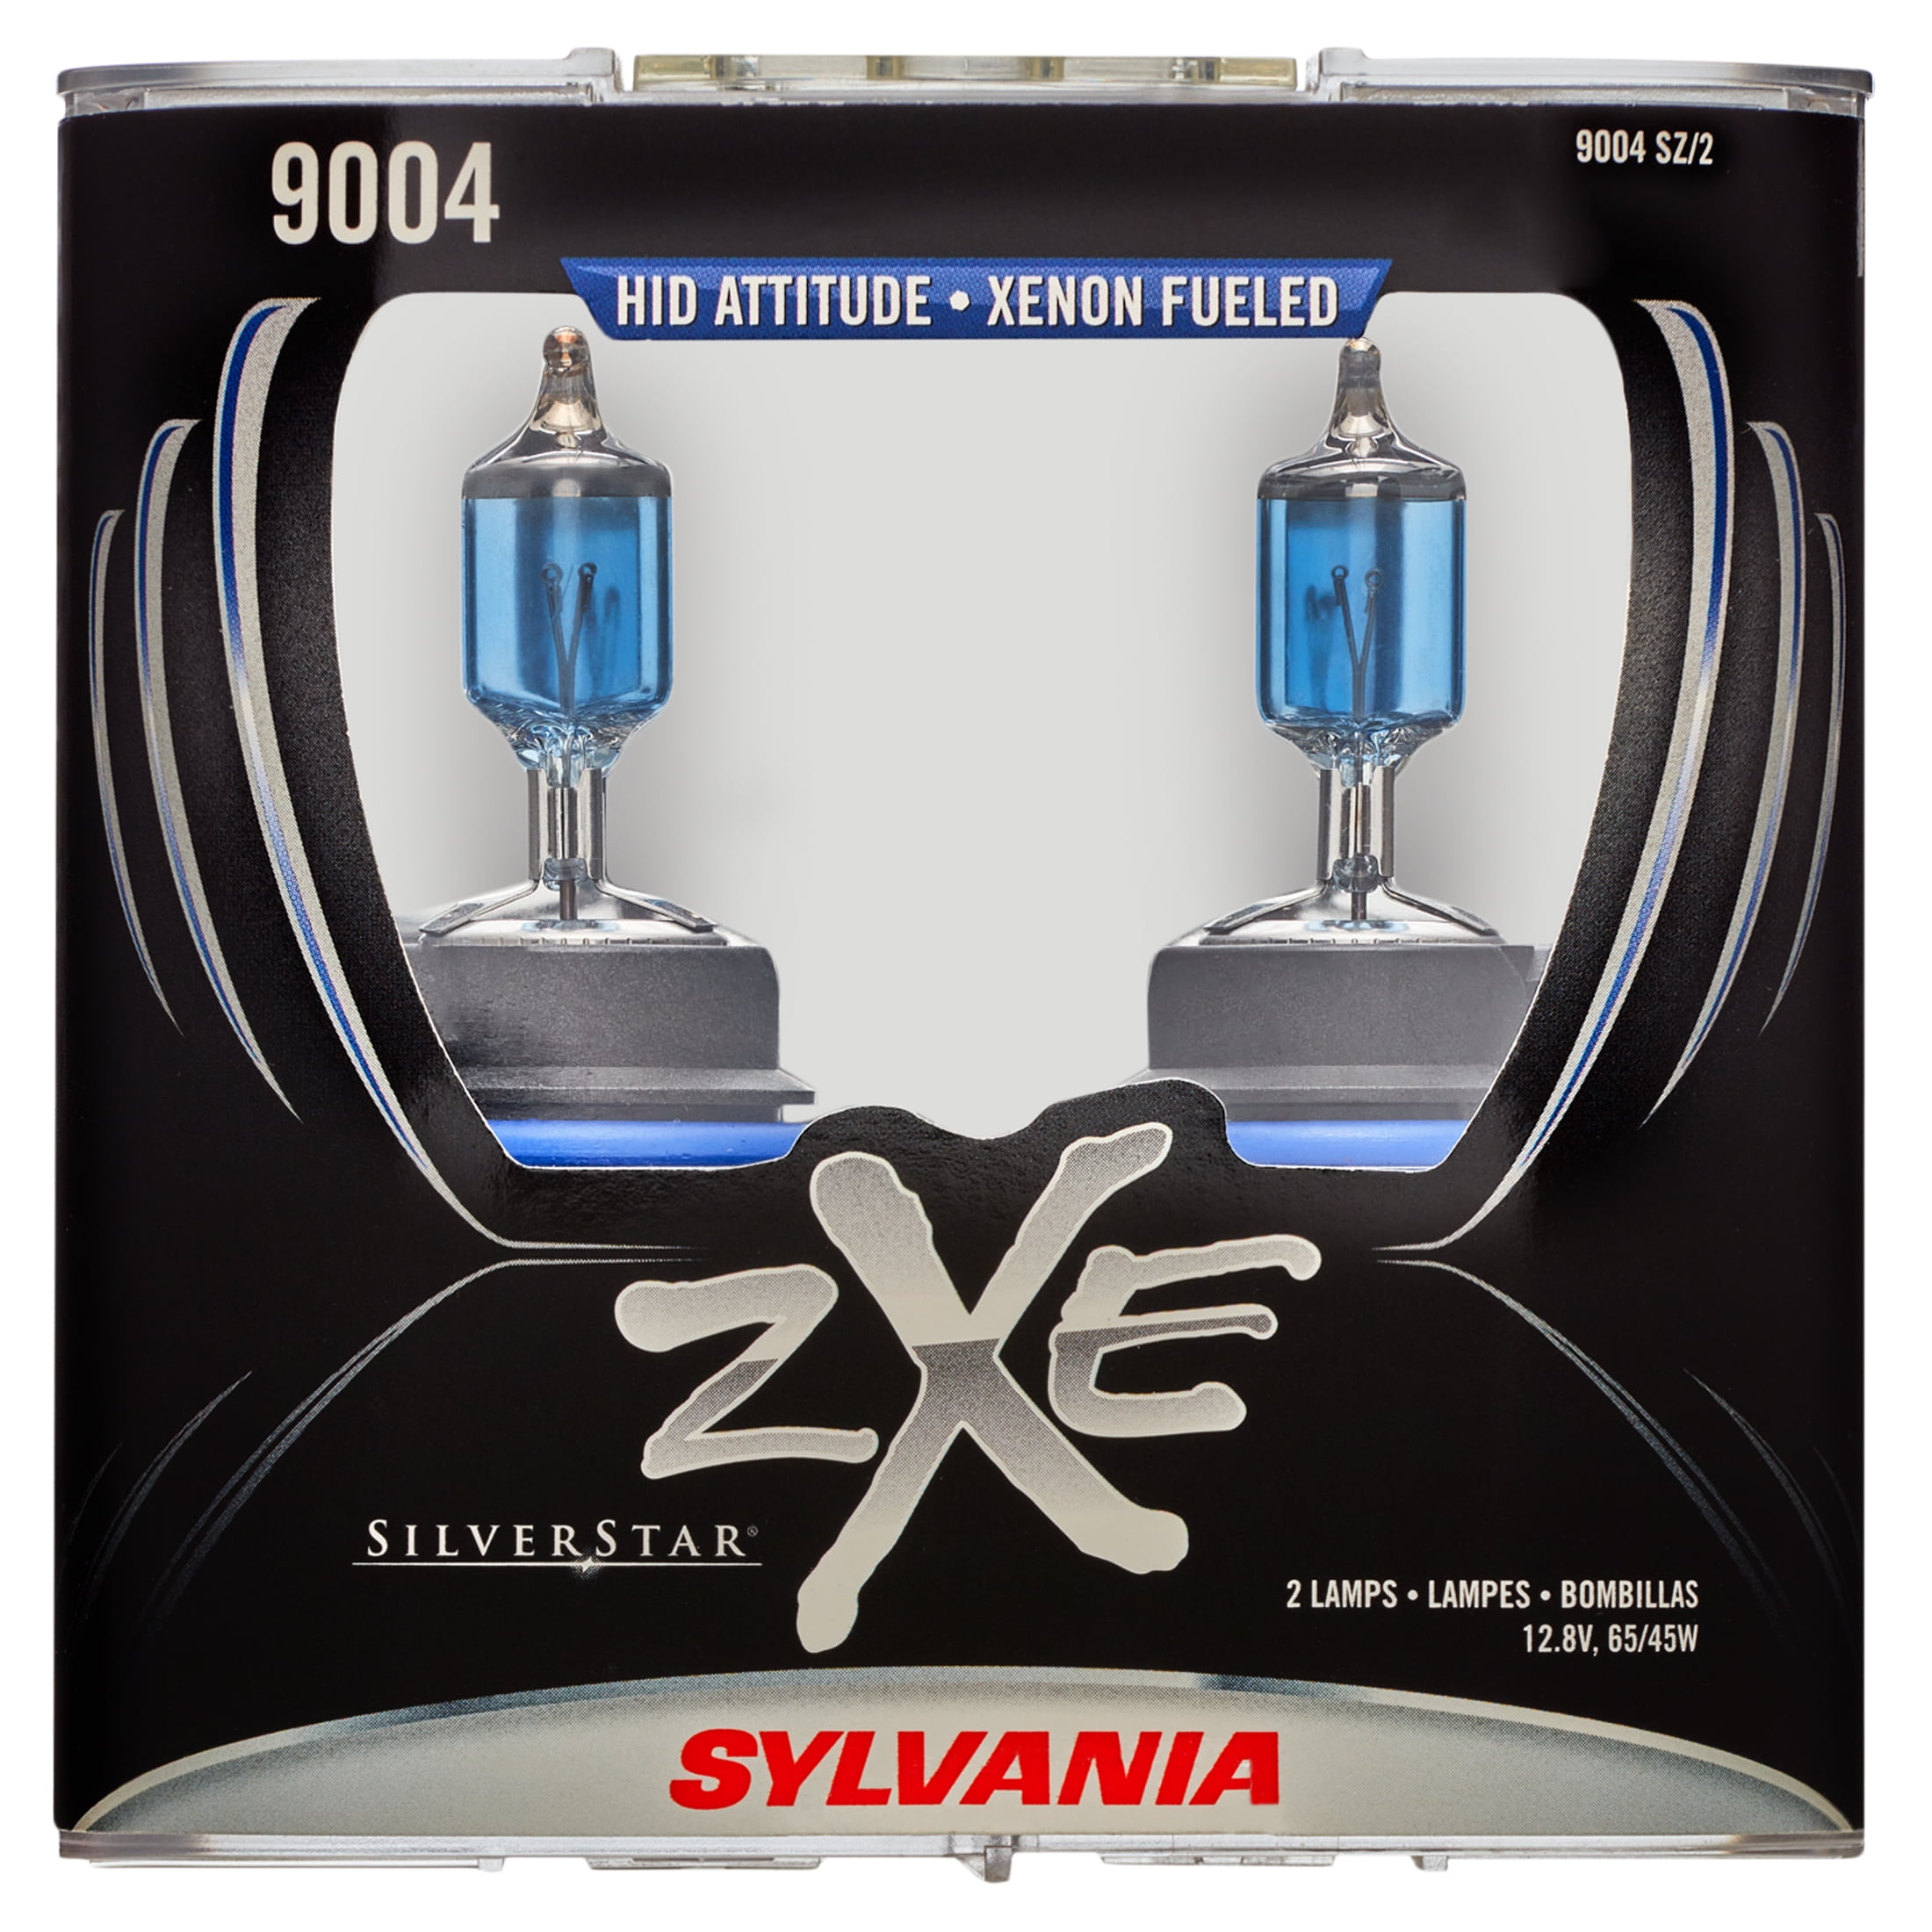 SYLVANIA 9004 SilverStar zXe High Performance Halogen Headlight Bulb, (Pack  of 2)